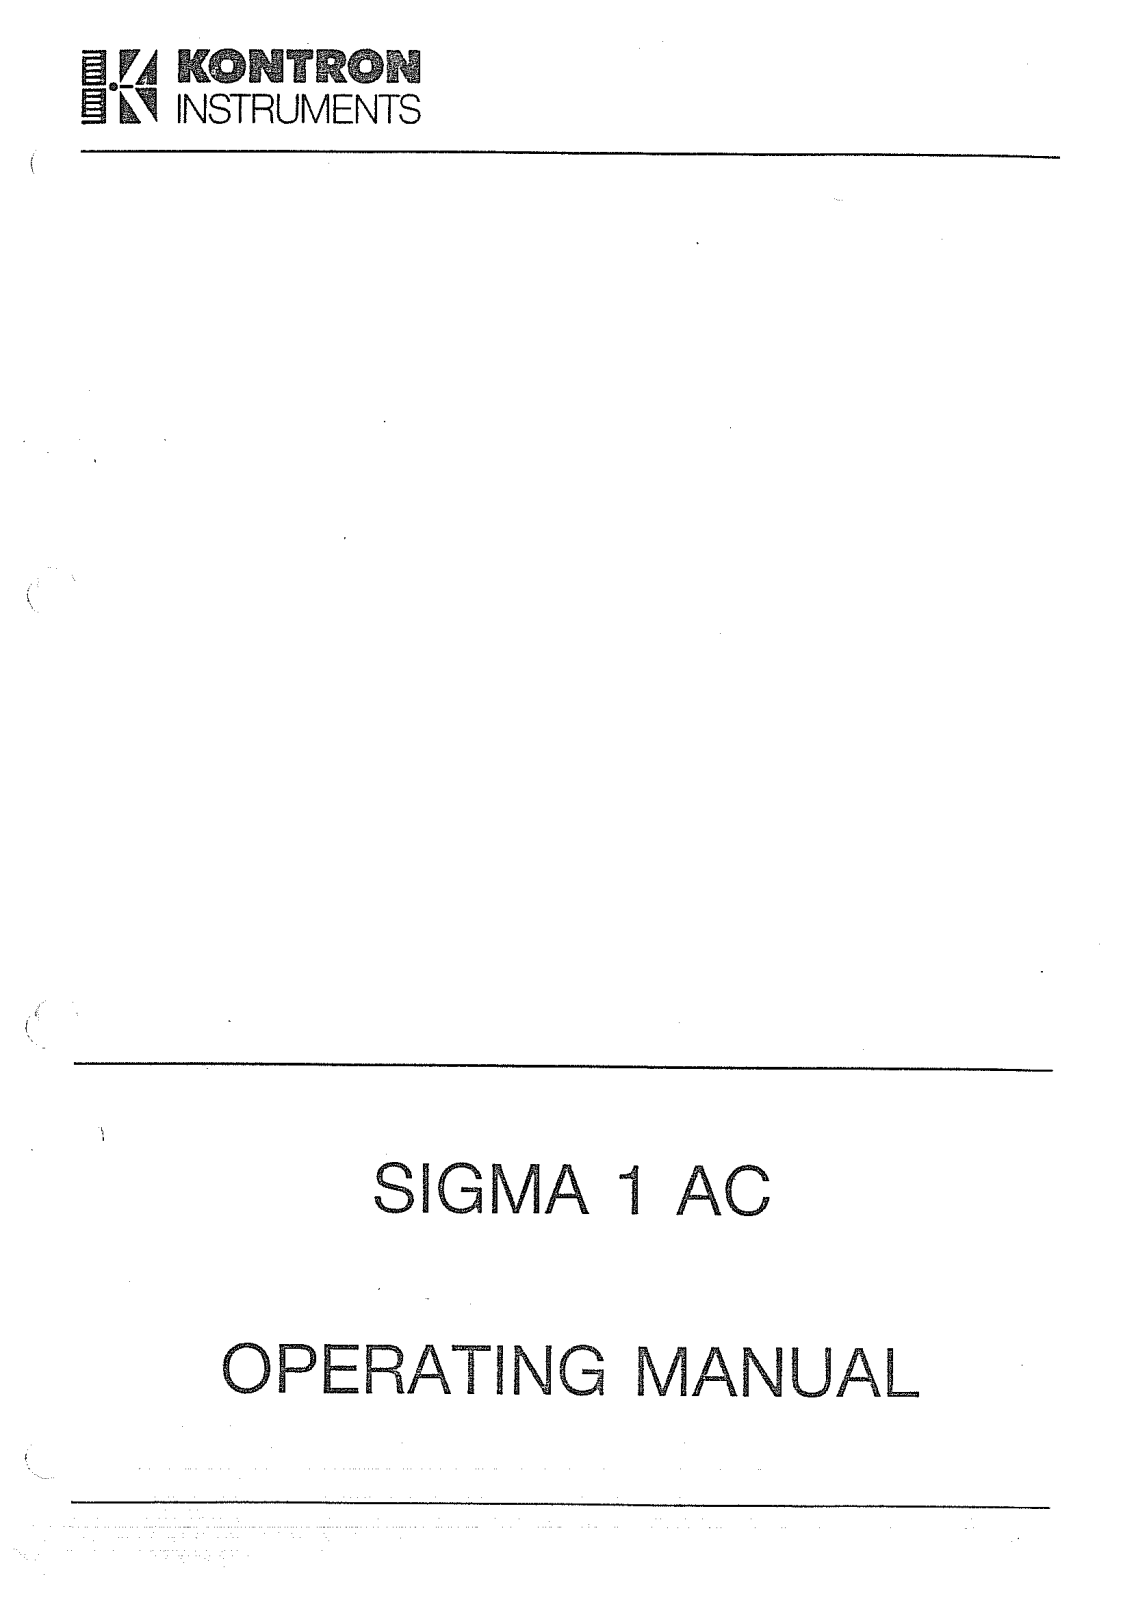 Kontron Sigma 1 AC User Manual